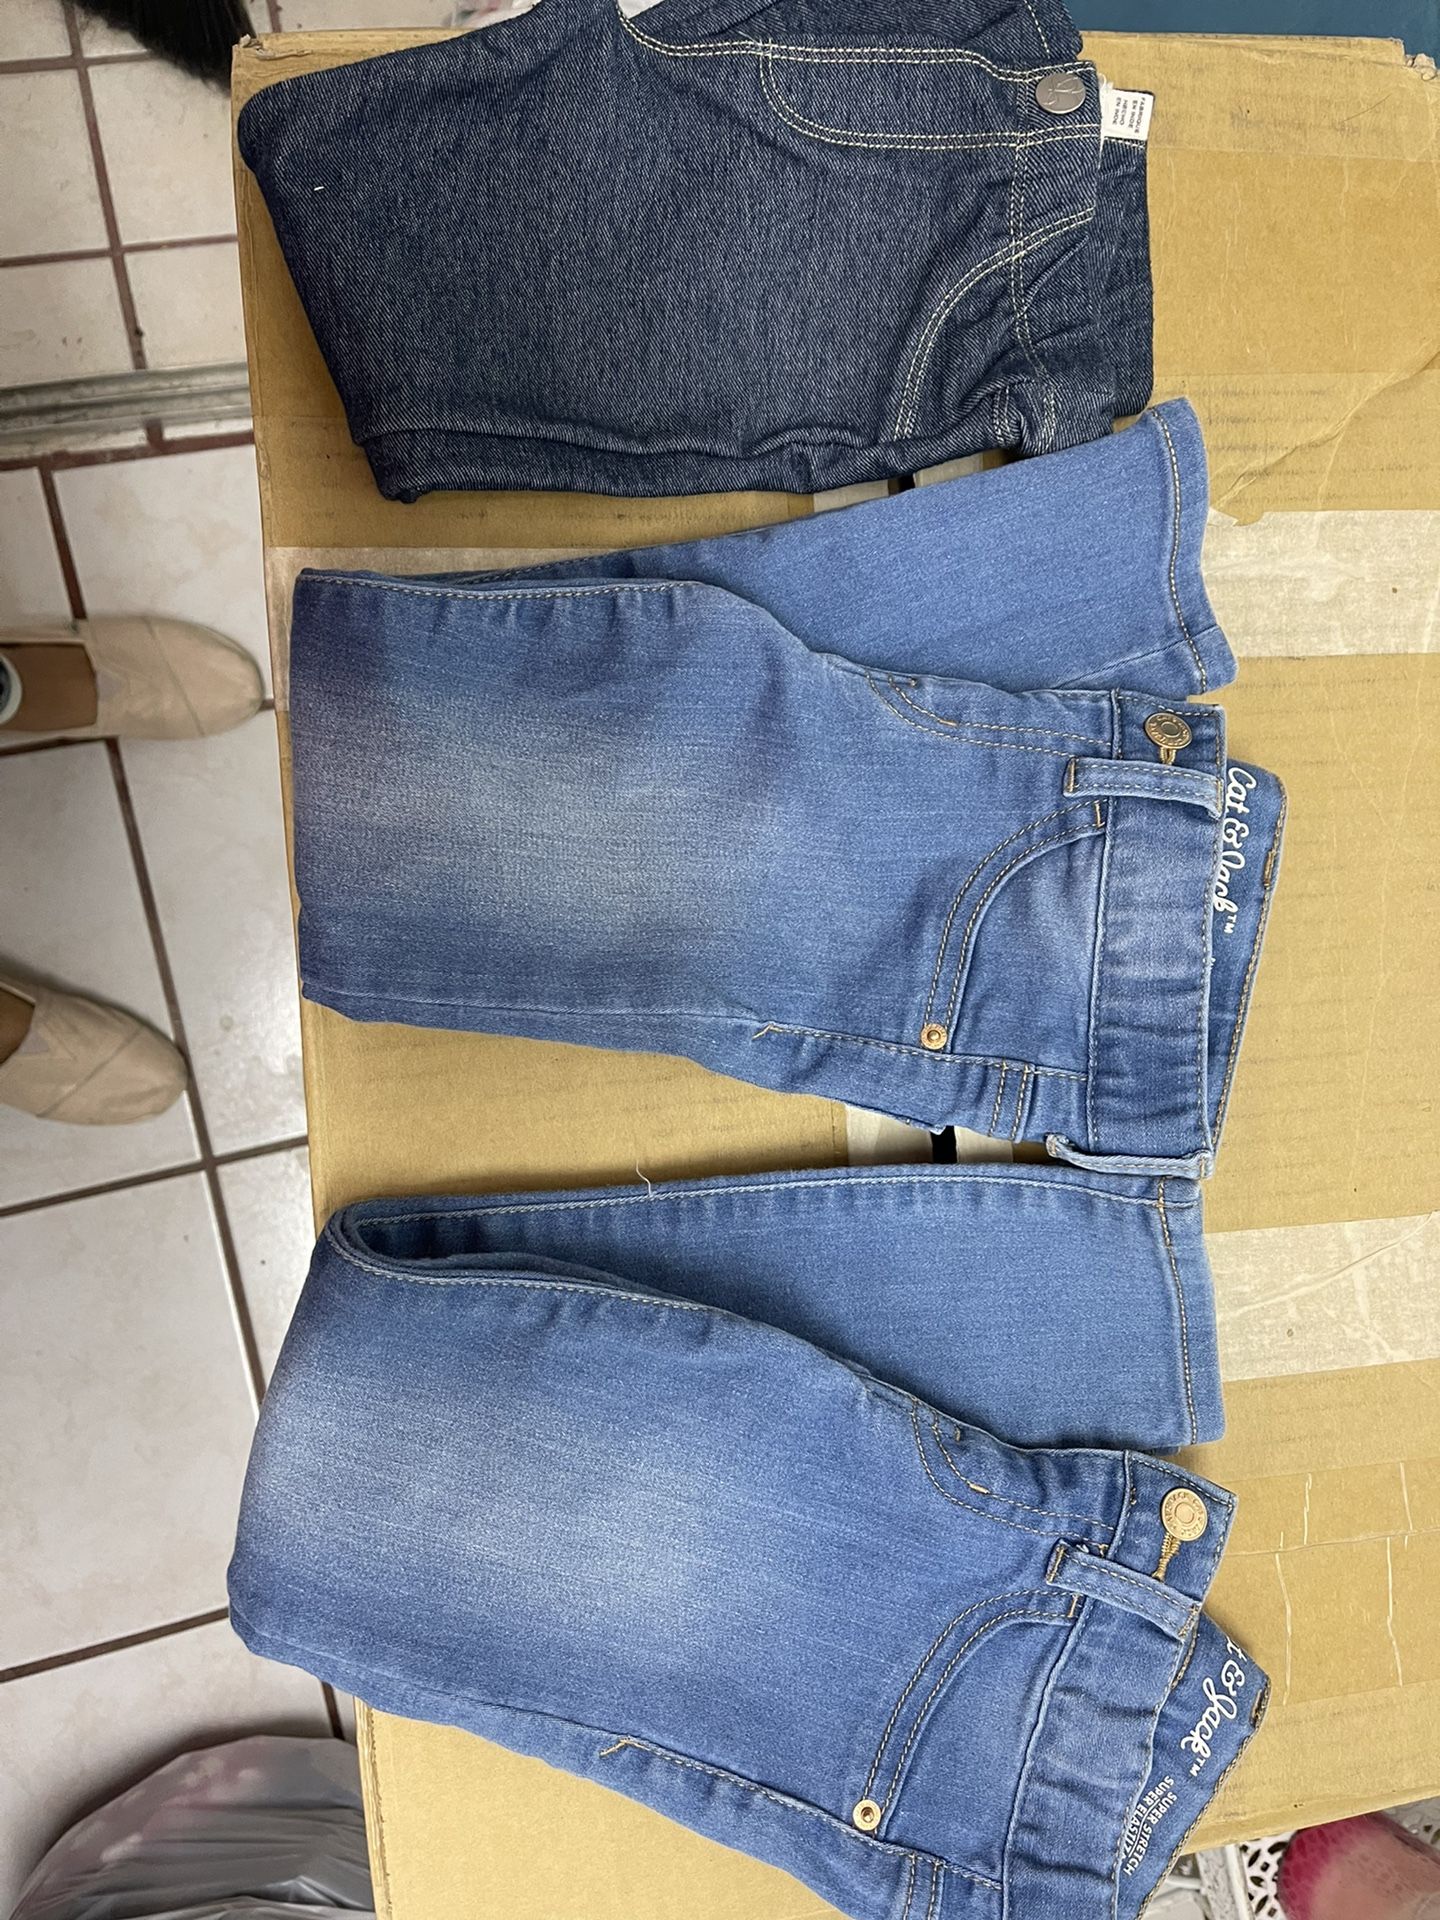 Jeans  Size 4t 